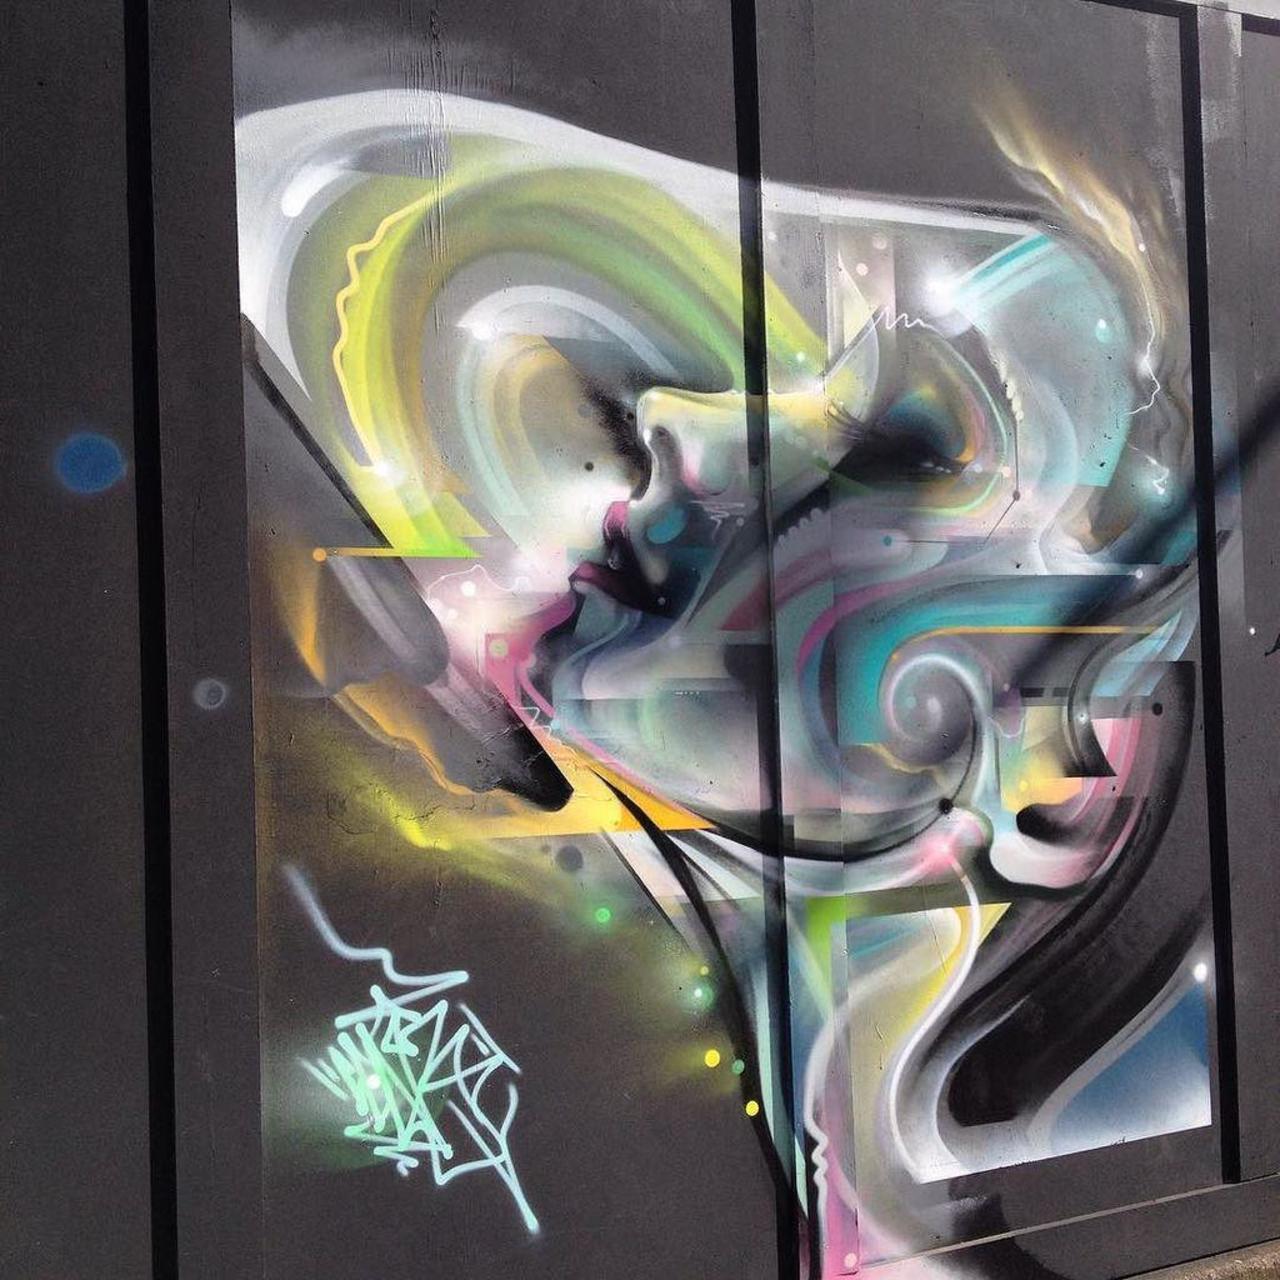 RT @MainaIte: "@StArtEverywhere: #streetart #graffiti #streetartlondon #london #thisislondon by isadarko http://t.co/p30fDmDQC7" maravilhoso